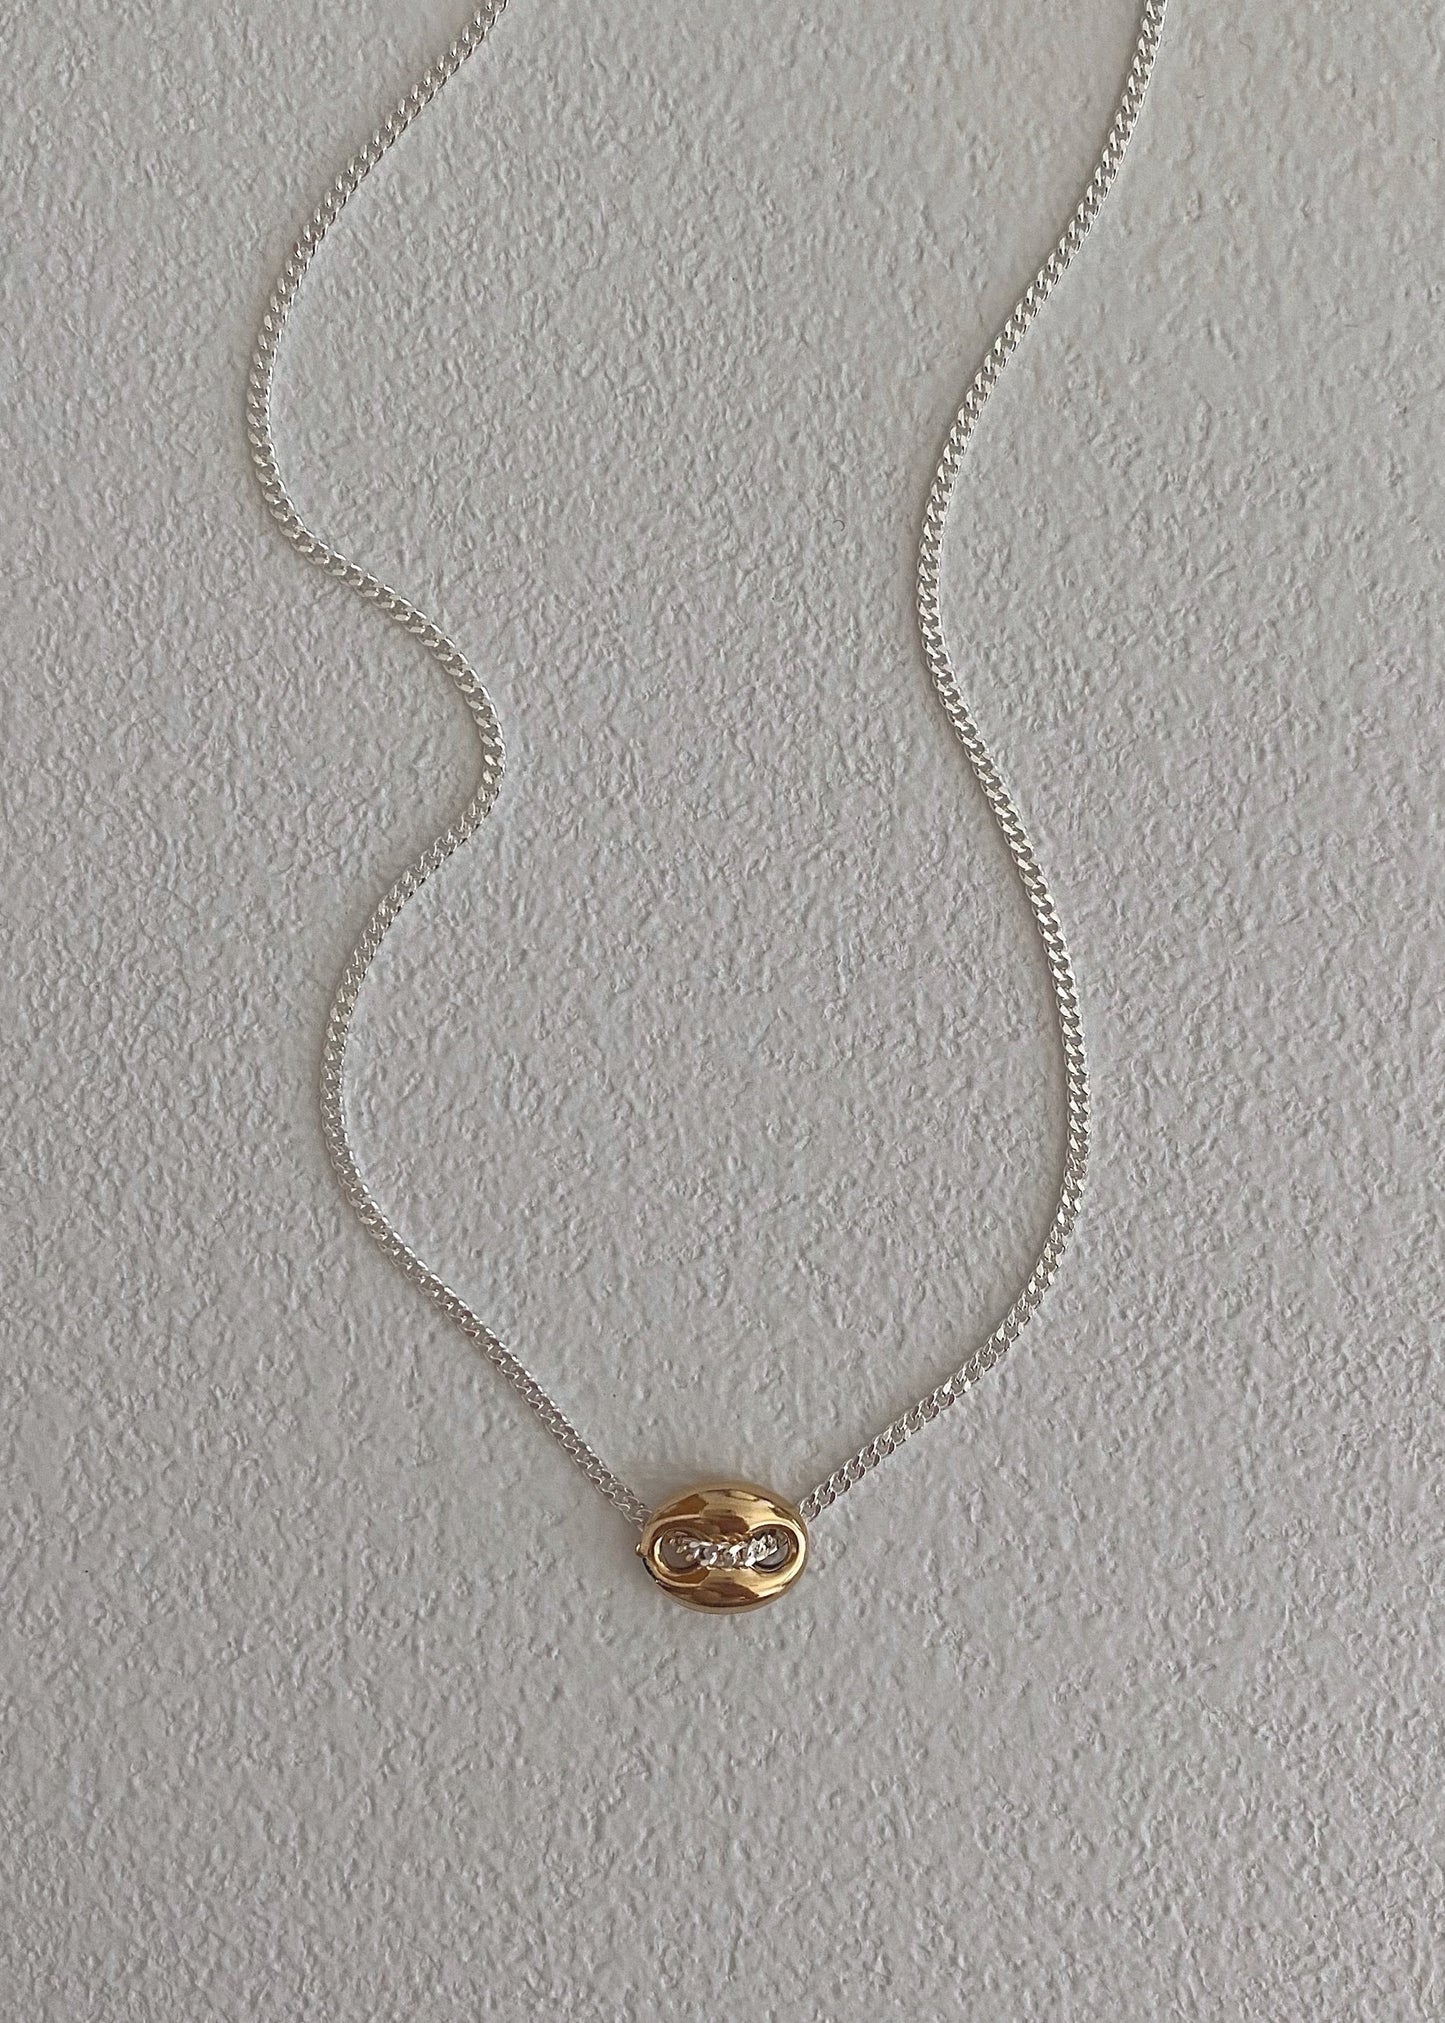 Galia necklace